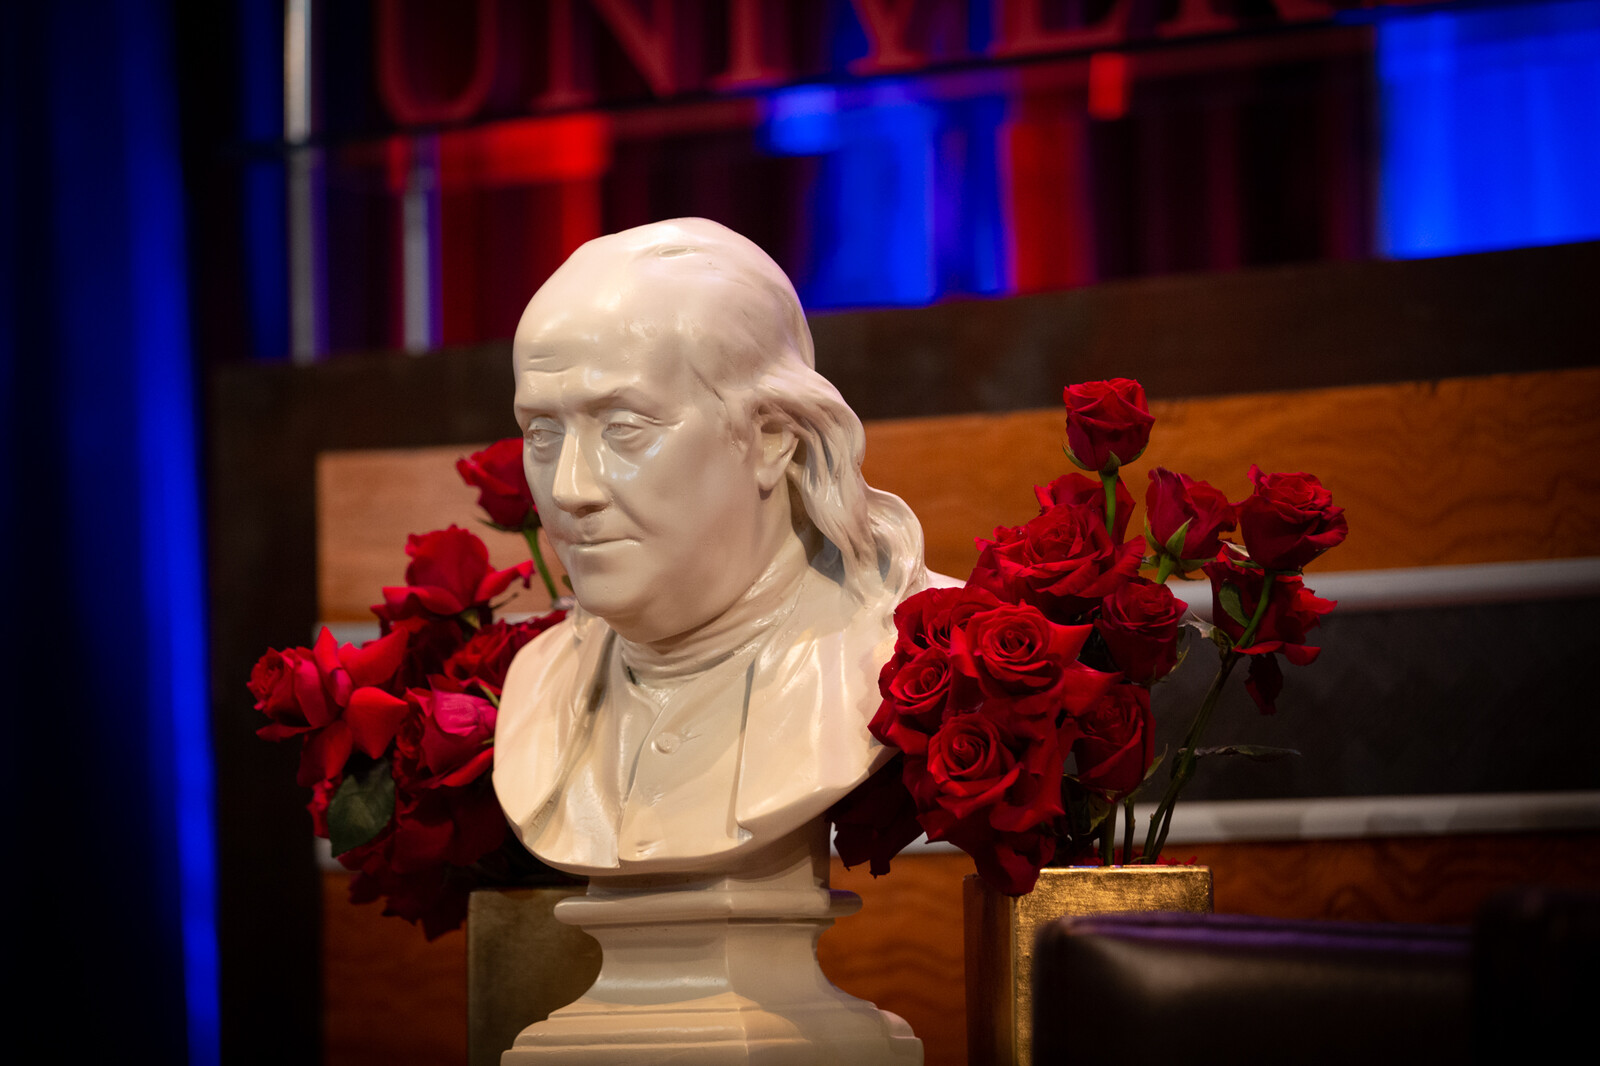 Ben Franklin bust